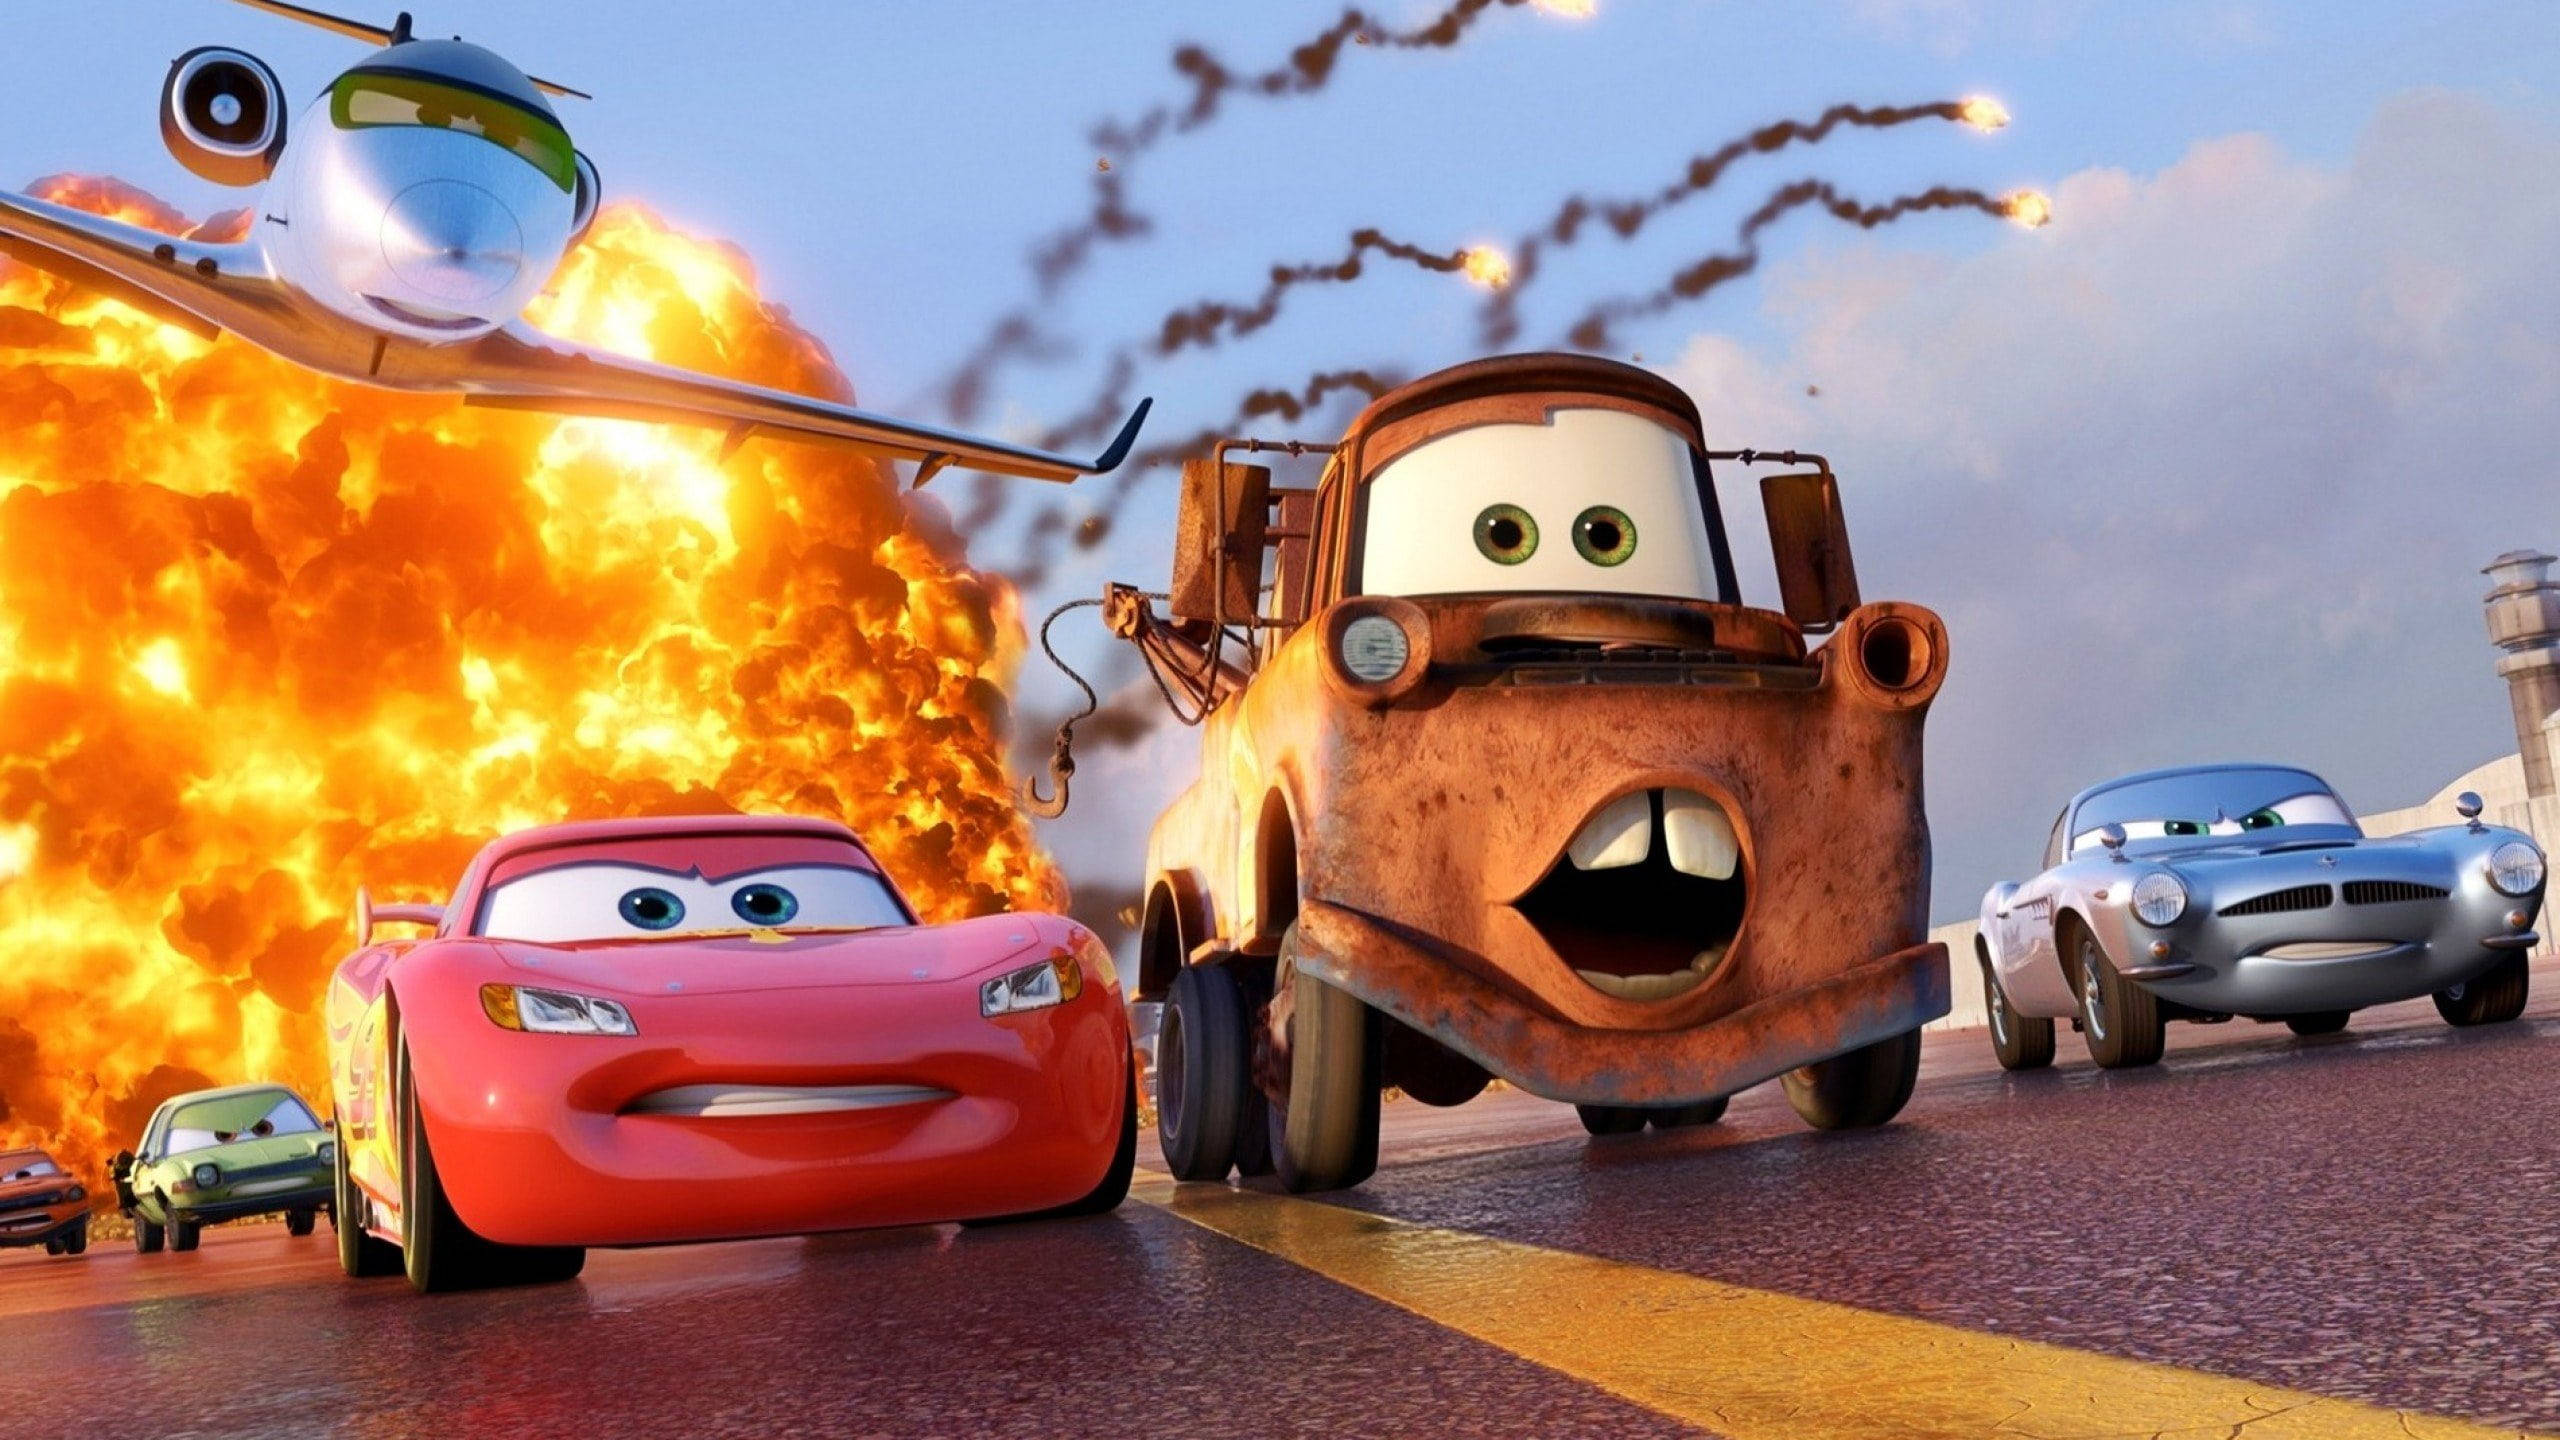 Disney Cars Explosion Wallpaper